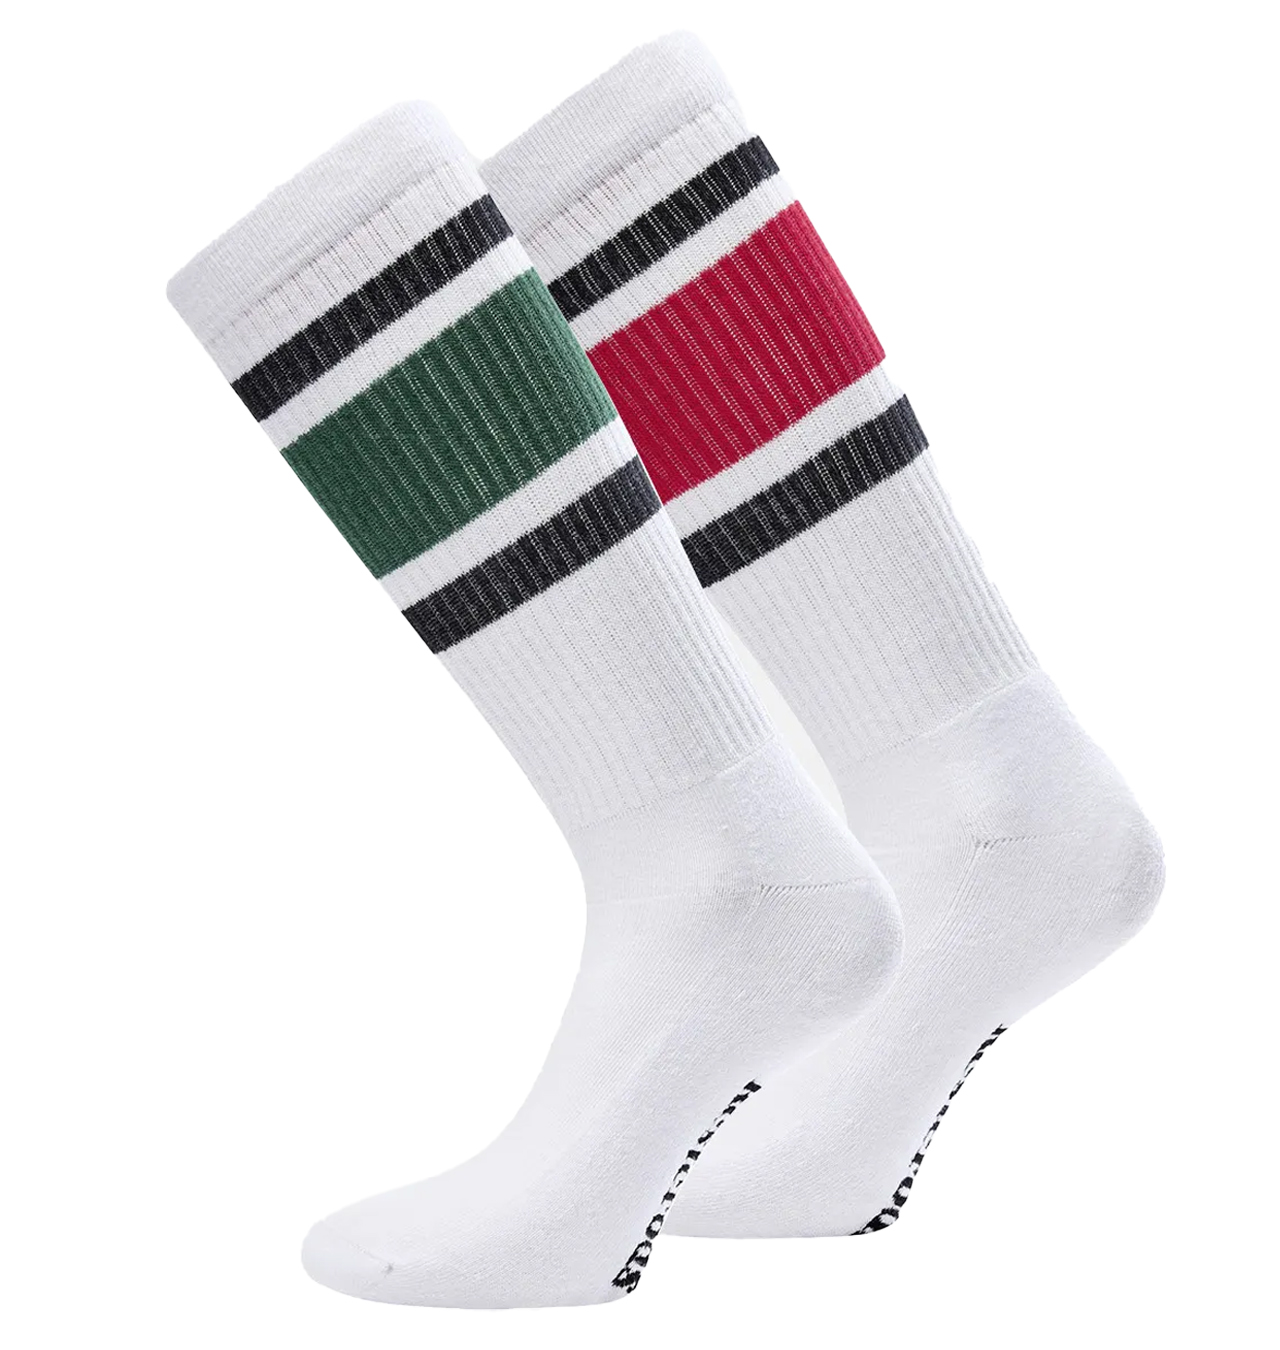 Resteröds - Tennis Socks 2-pack - Navy/Red/Green